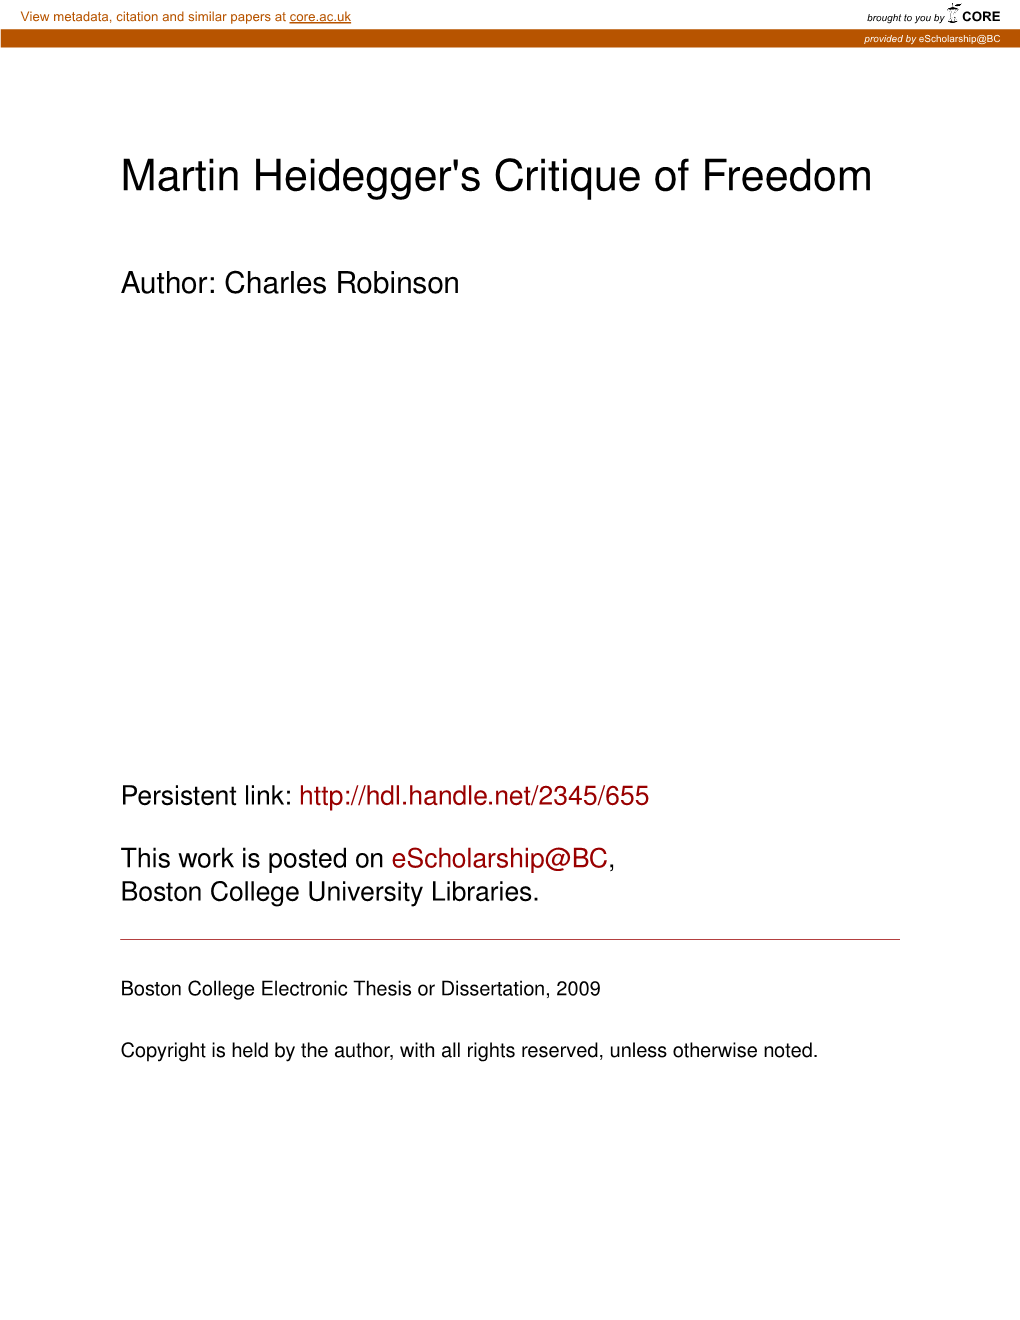 Martin Heidegger's Critique of Freedom